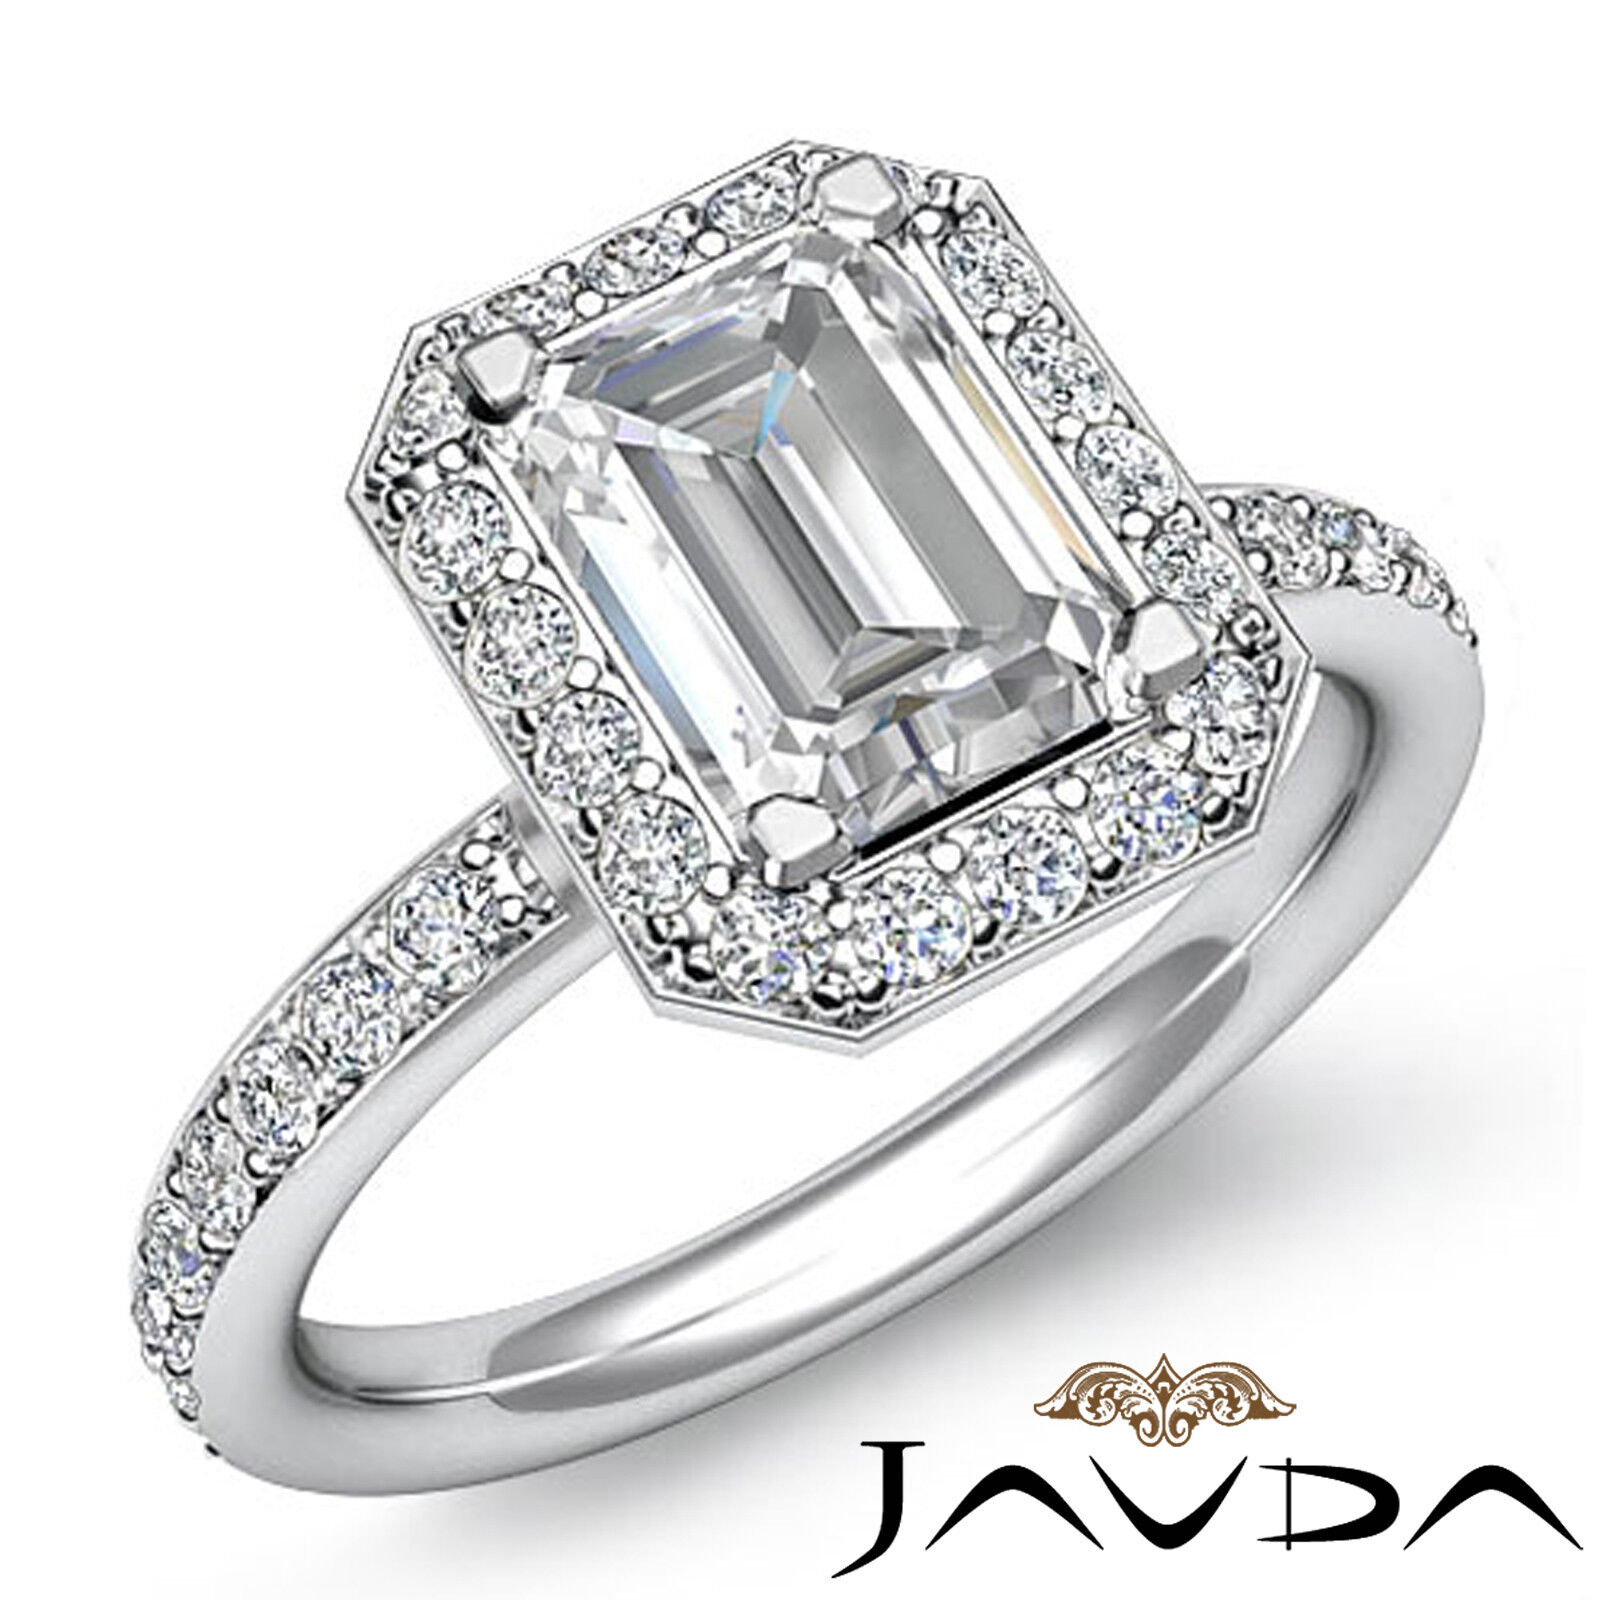 Glistening Emerald Cut Diamond Engagement Ring GIA G SI1 14k White Gold 1.56 ct